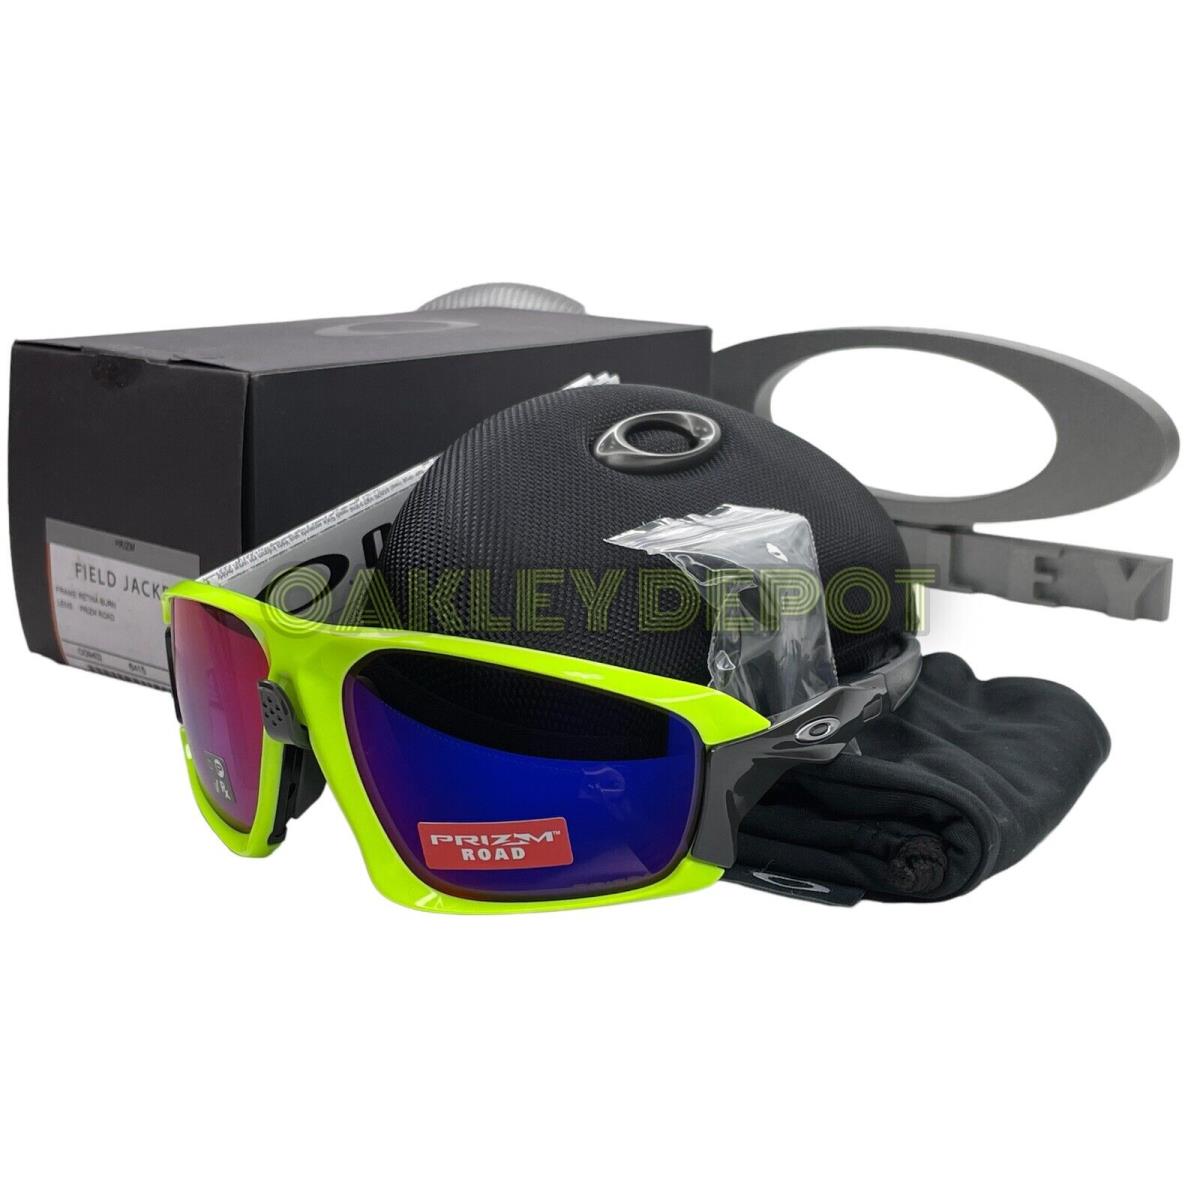 Oakley Field Jacket 009402 Retina Burn/prizm Road Sunglasses - Frame: RETINA BURN, Lens: PRIZM ROAD